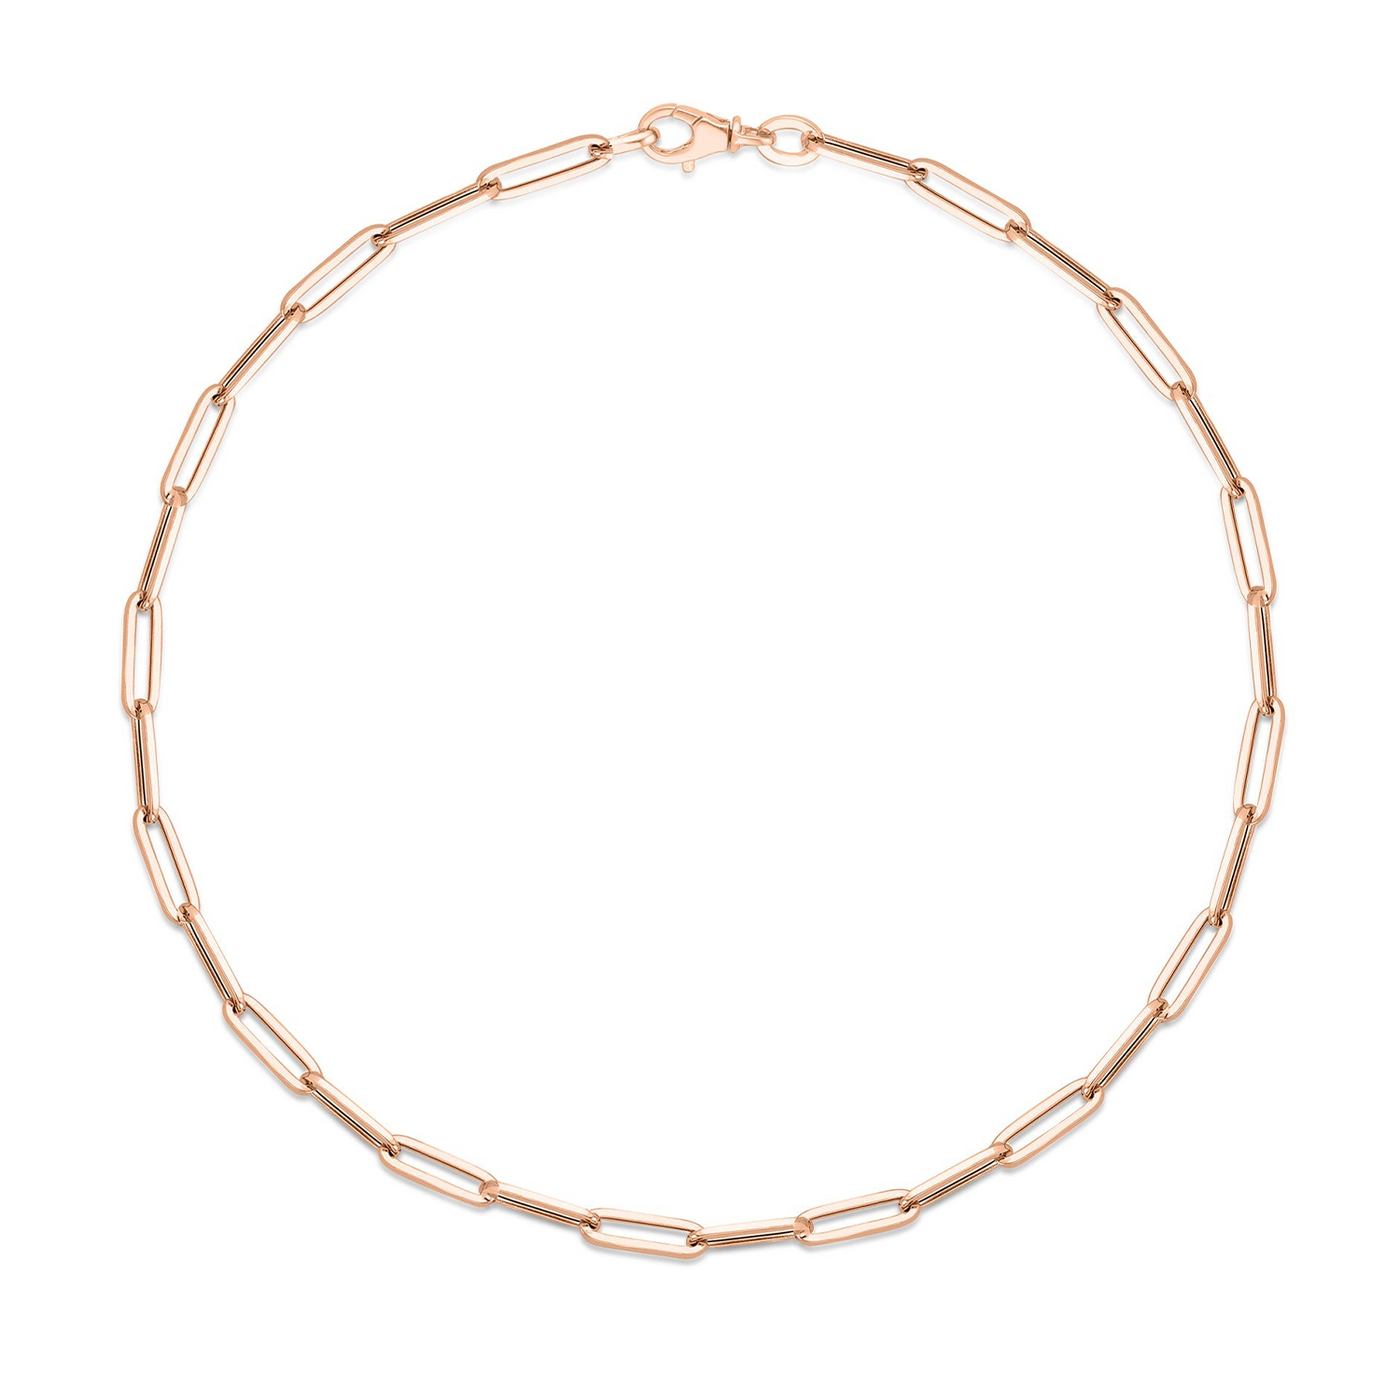 Medium Link Chain Necklace